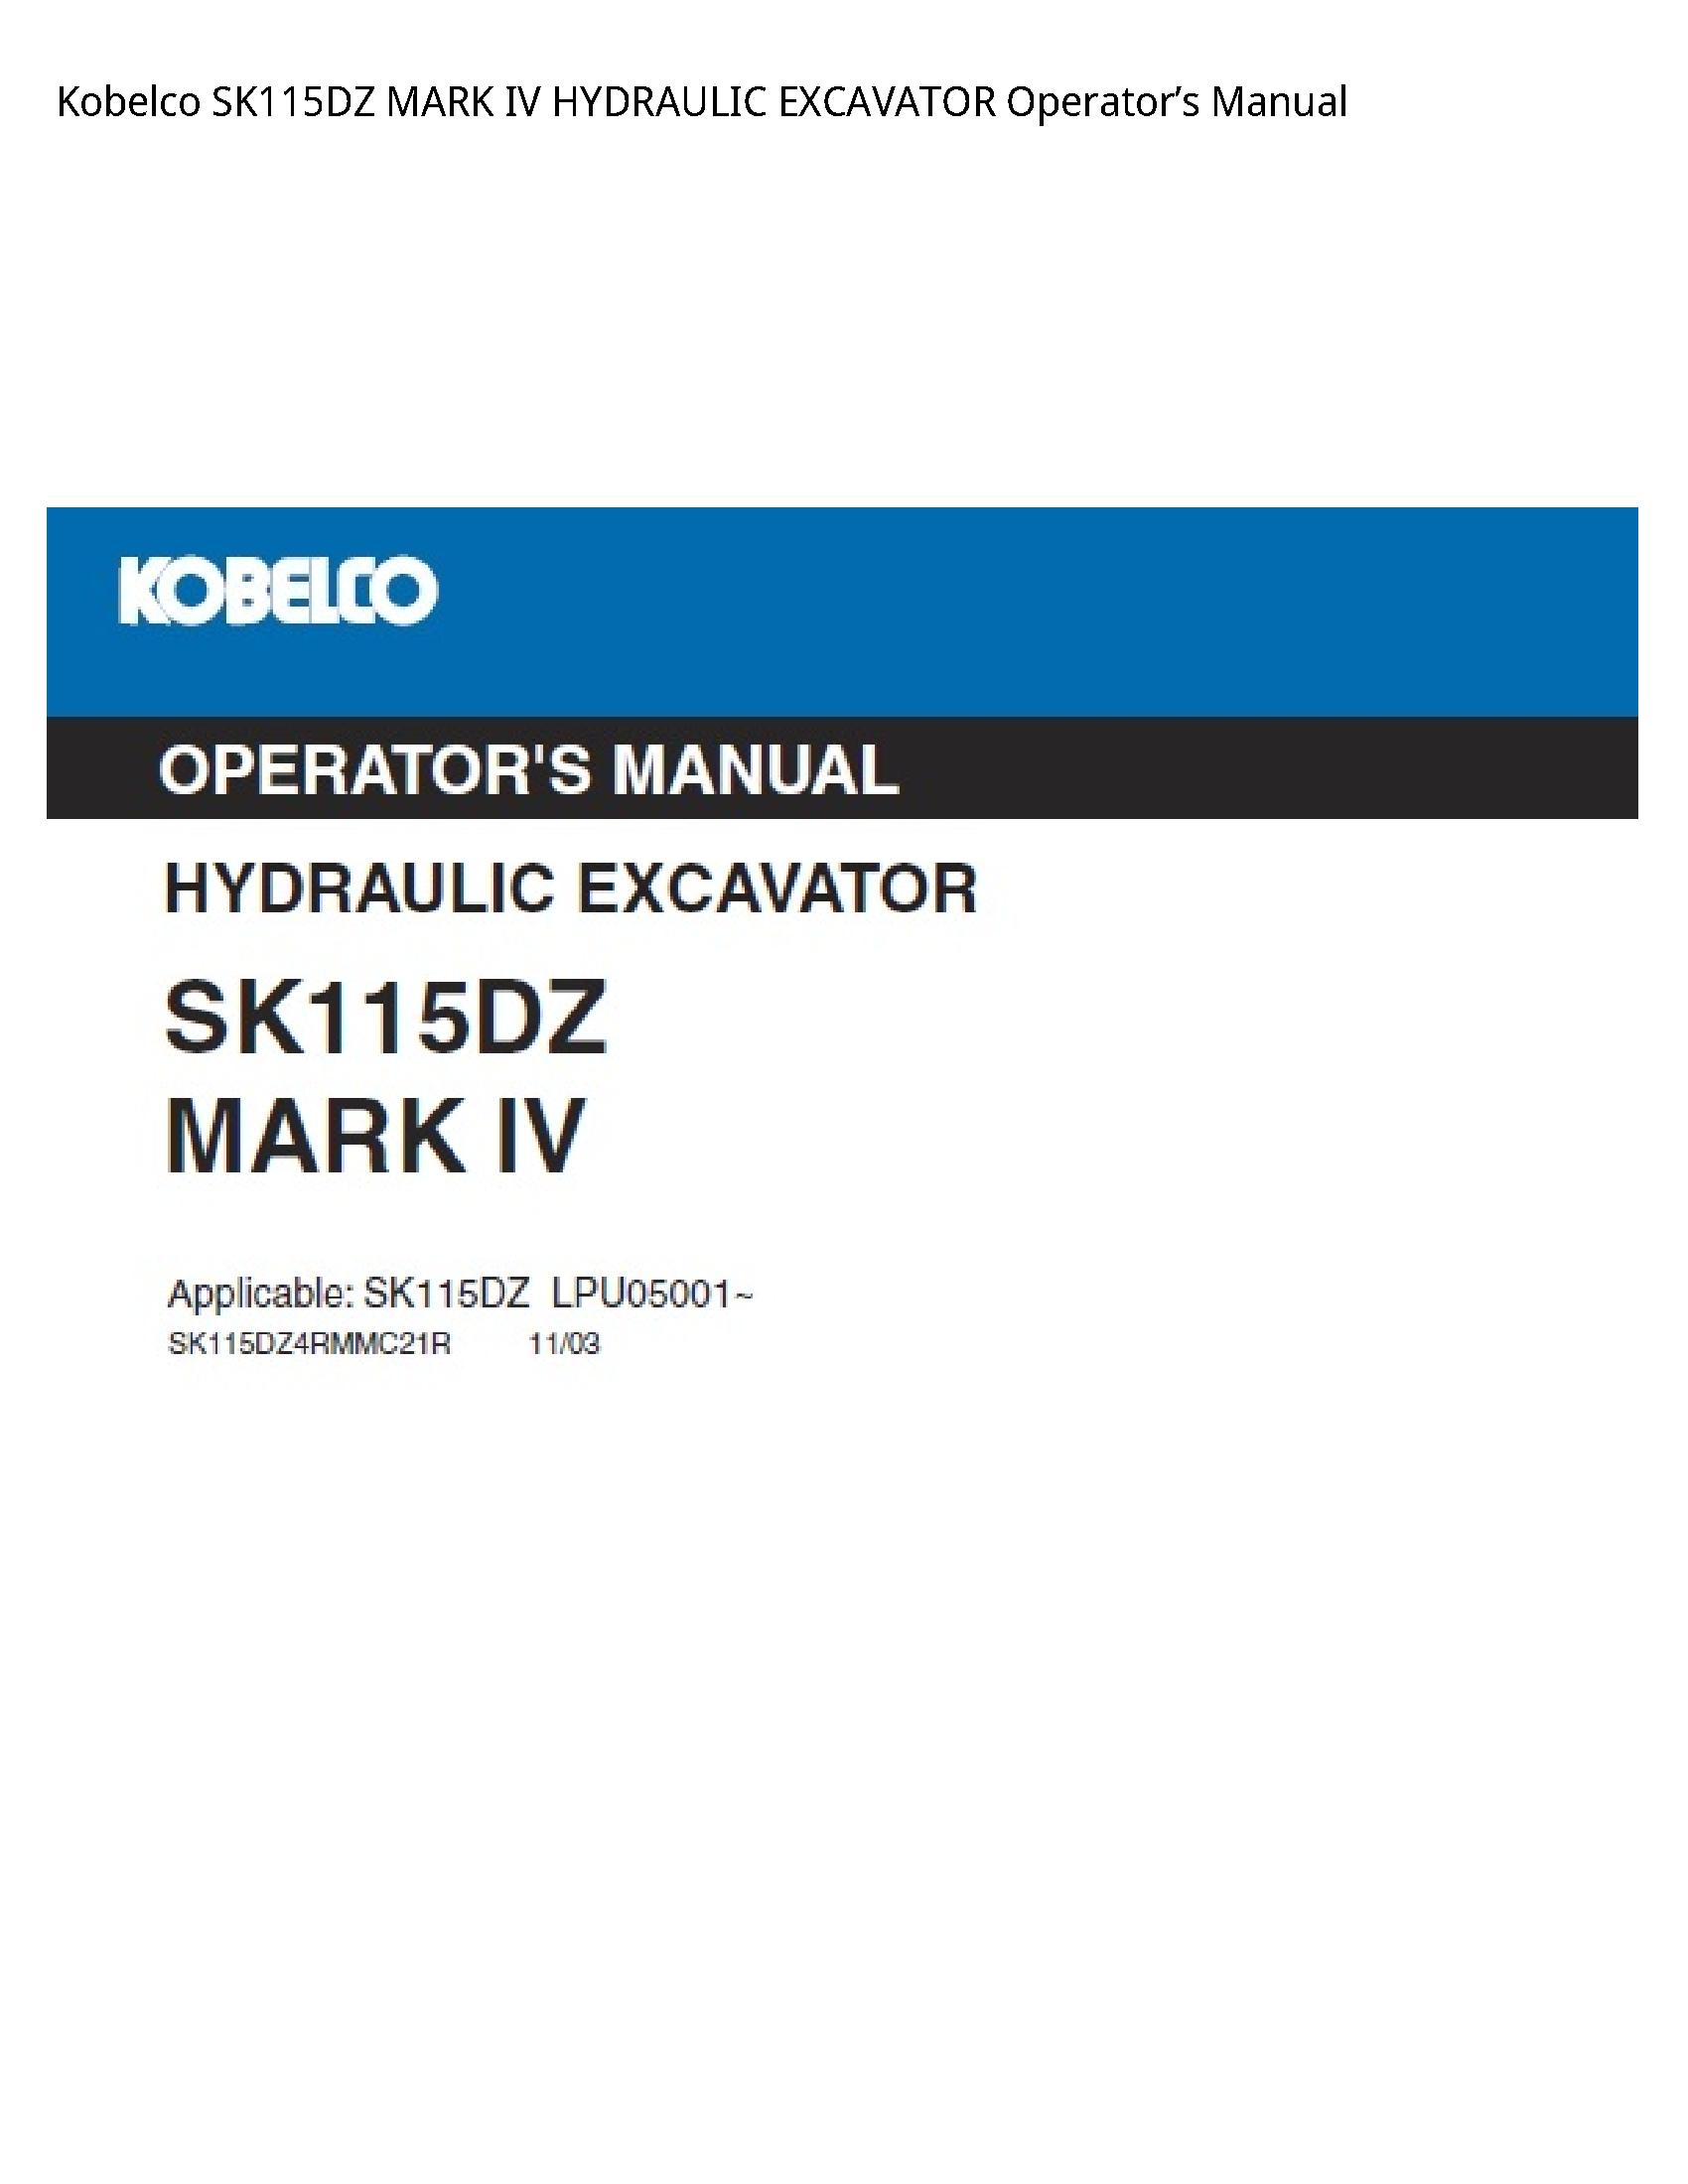 Kobelco SK115DZ MARK IV HYDRAULIC EXCAVATOR Operator’s manual